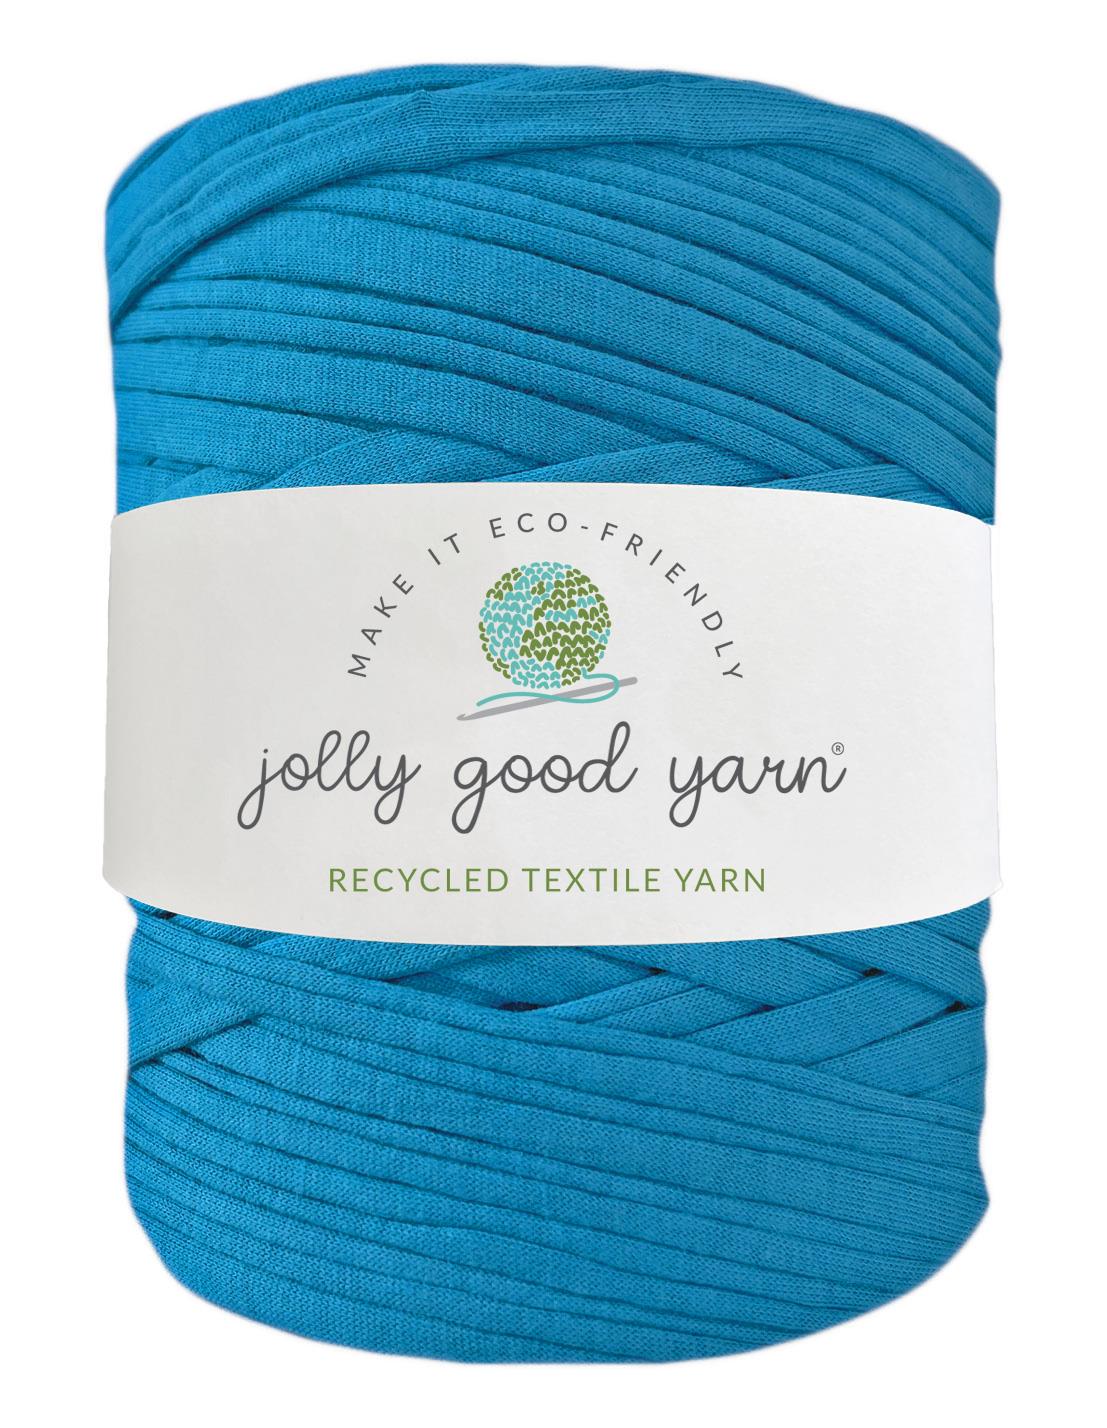 Sky blue t-shirt yarn (100-120m)